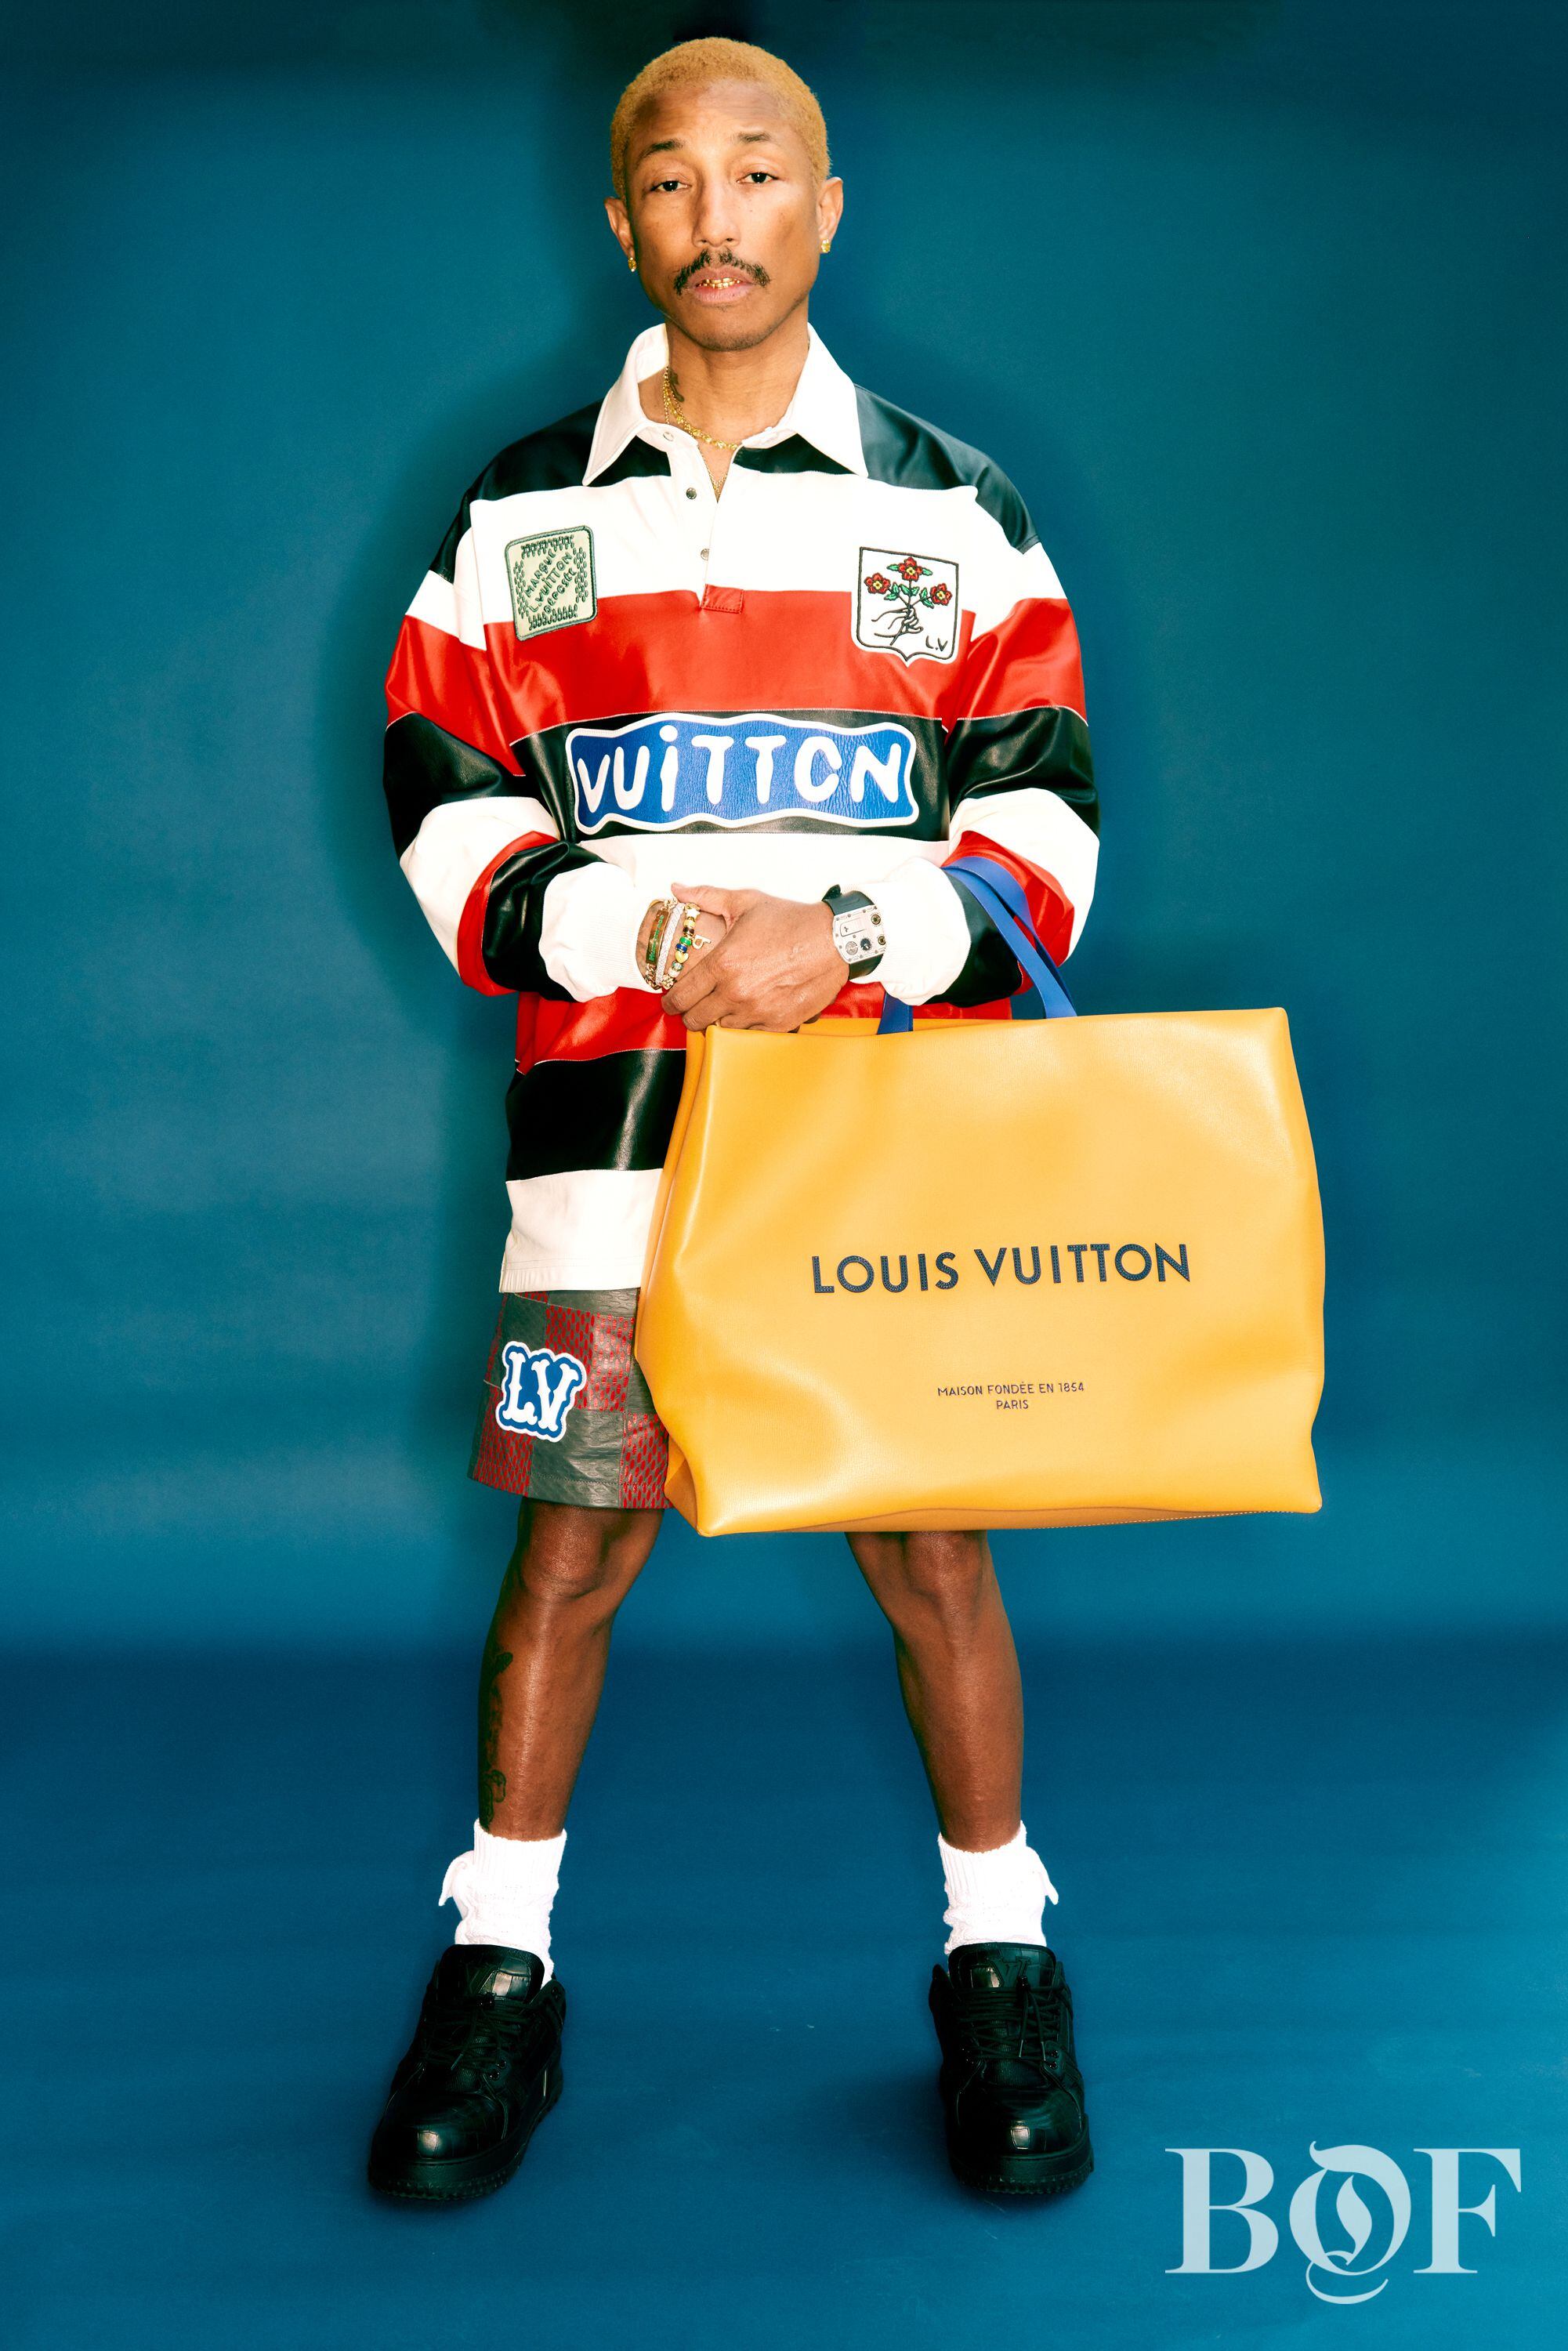 You can still buy J Balvin's sensational Supreme x Louis Vuitton